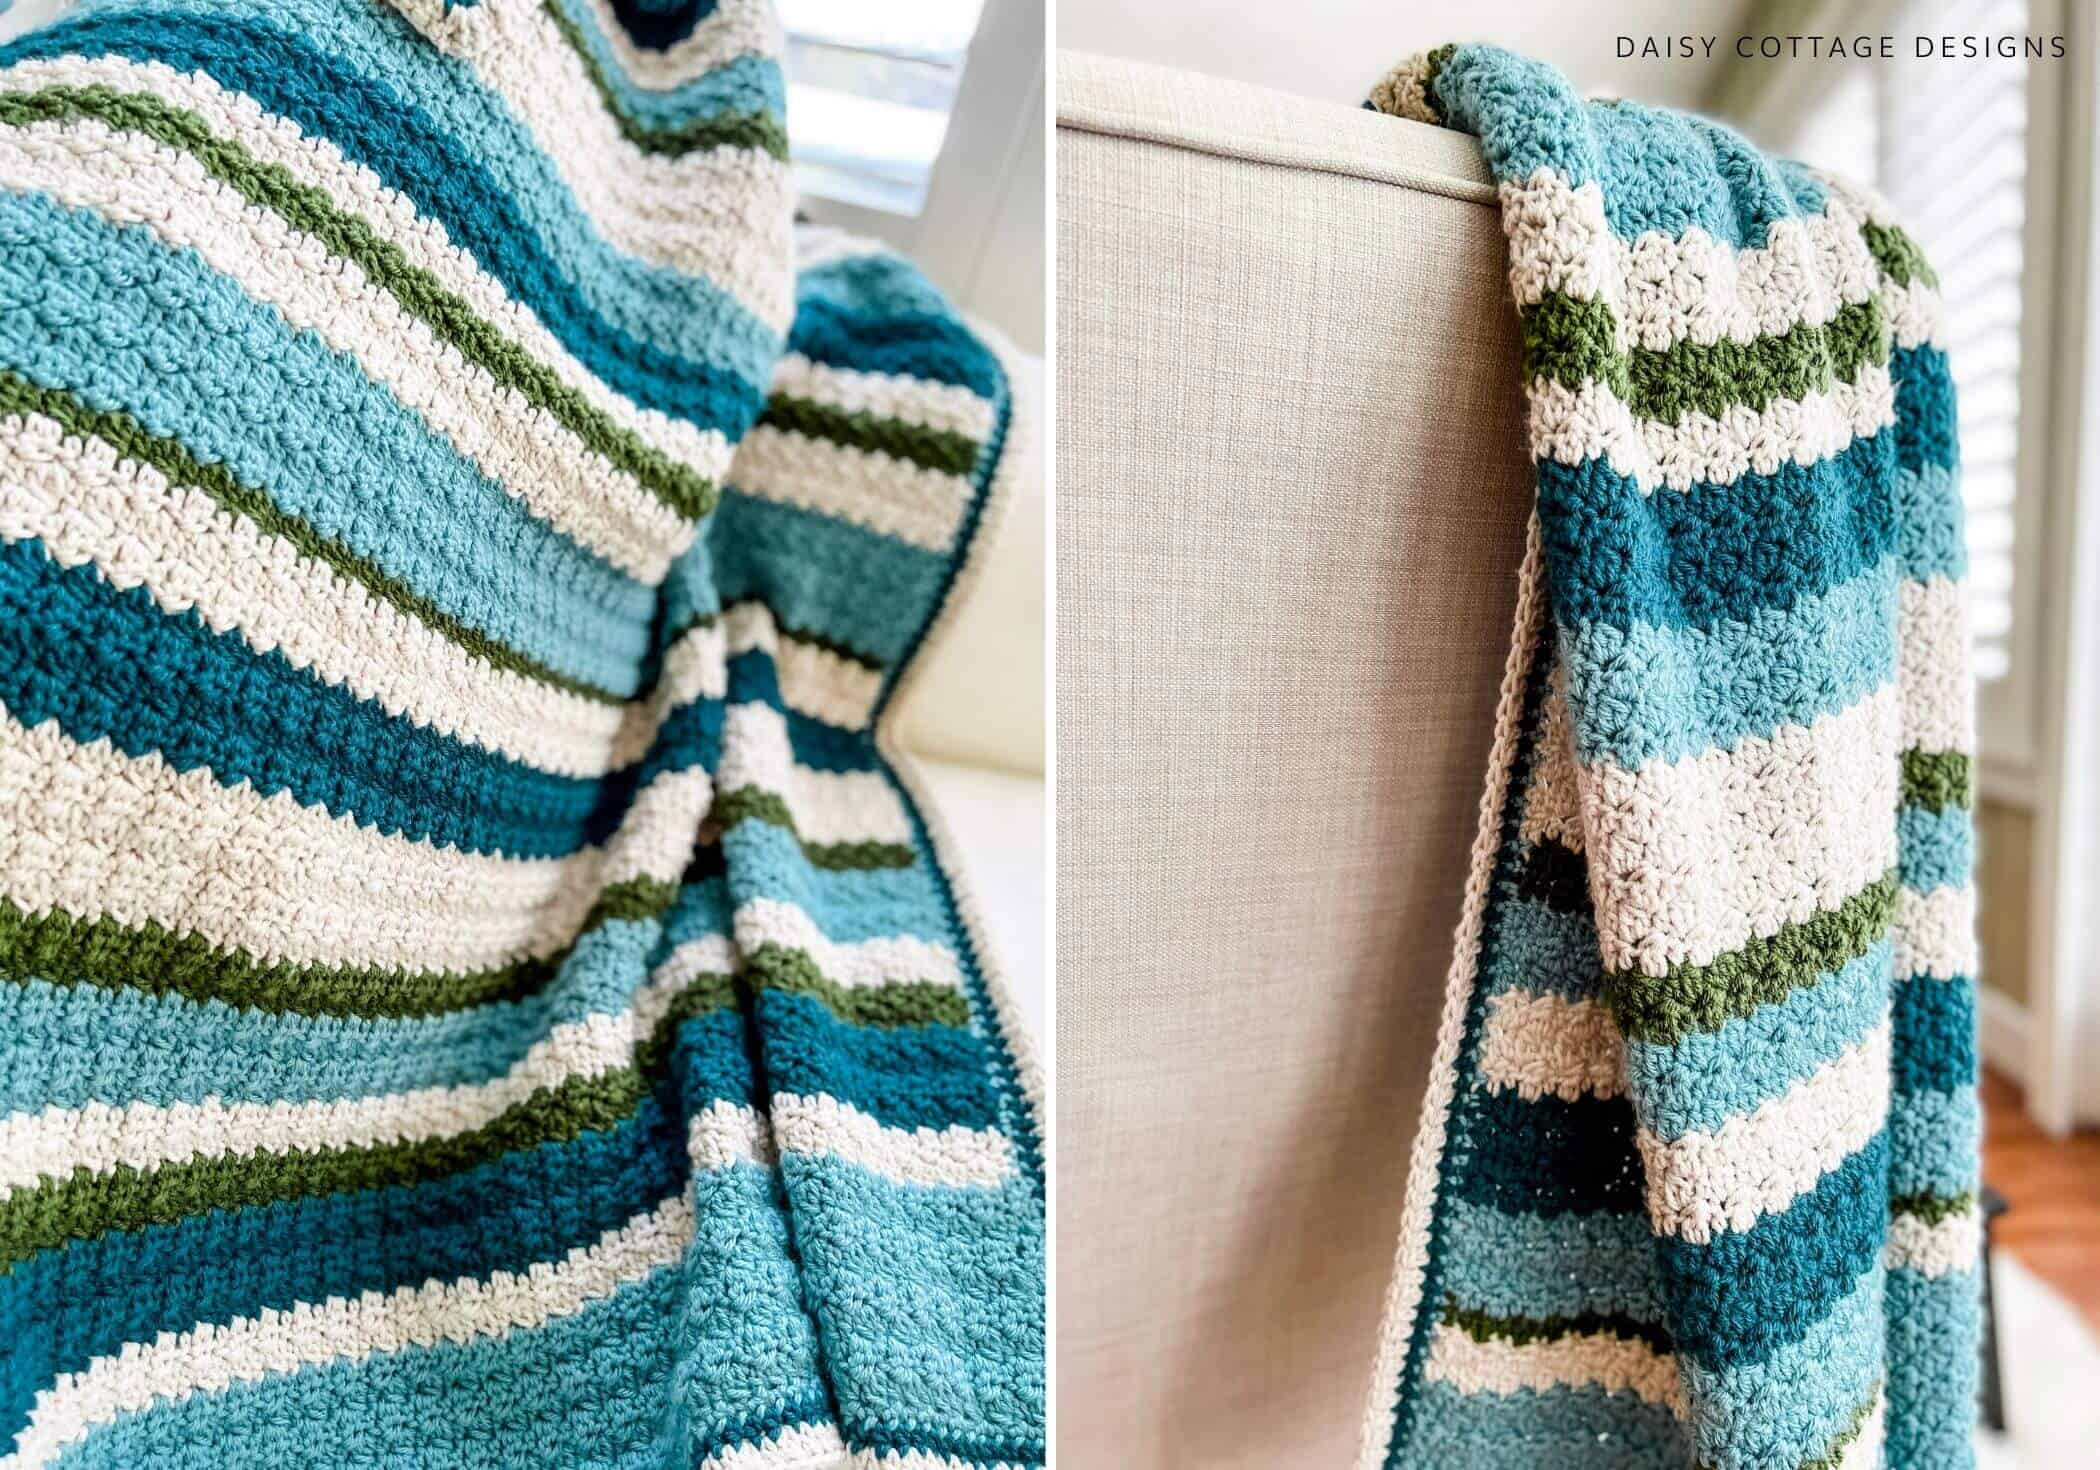 Green and blue striped crochet blanket pattern